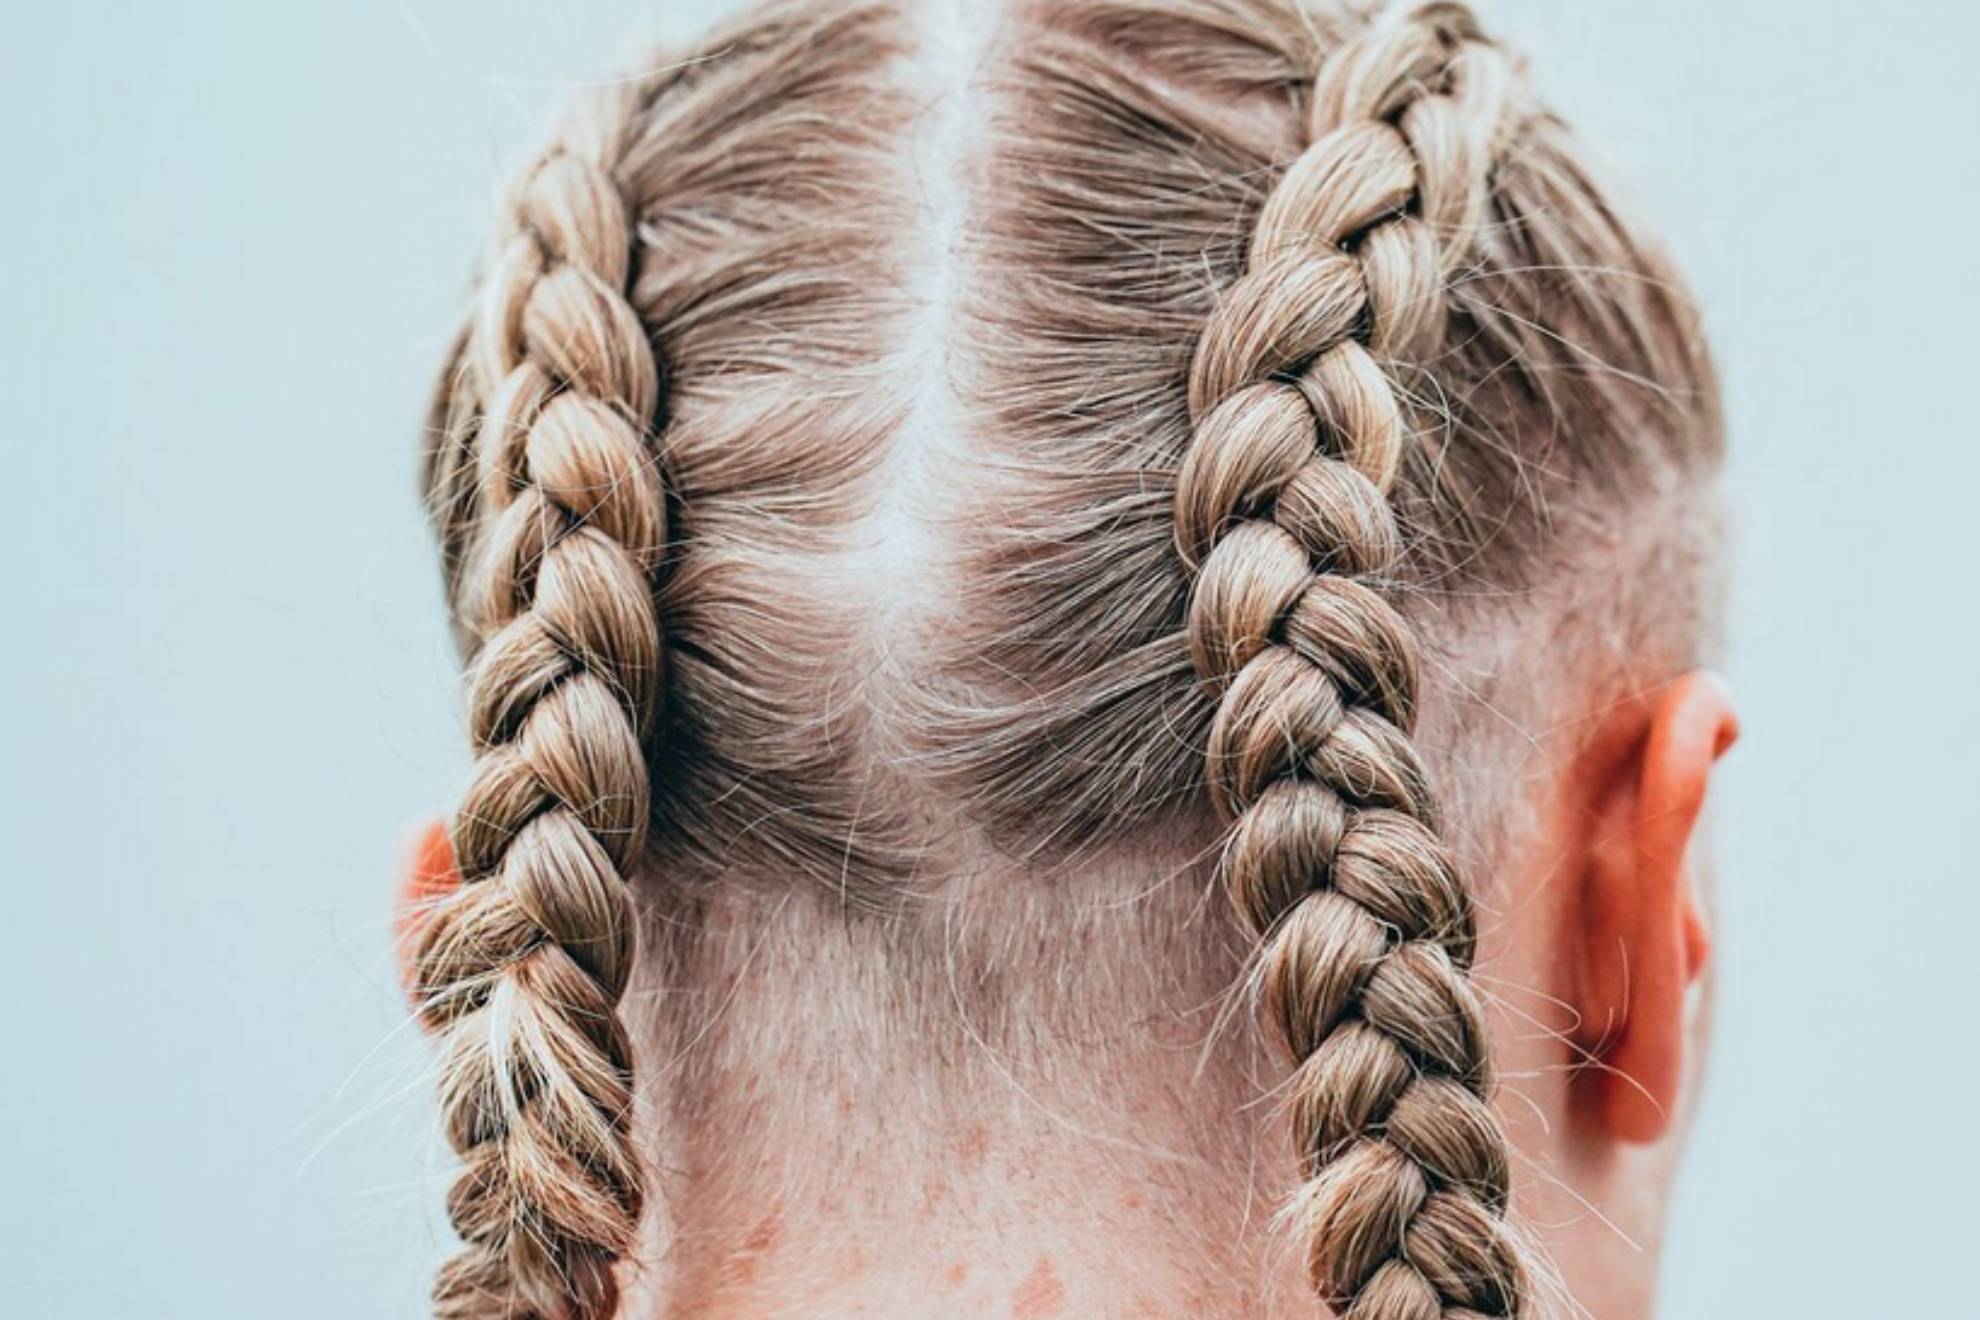 Debate over Haaland's braided hairstyle: Is it most like a viking, Lana Rhoades or Greta Thunberg?